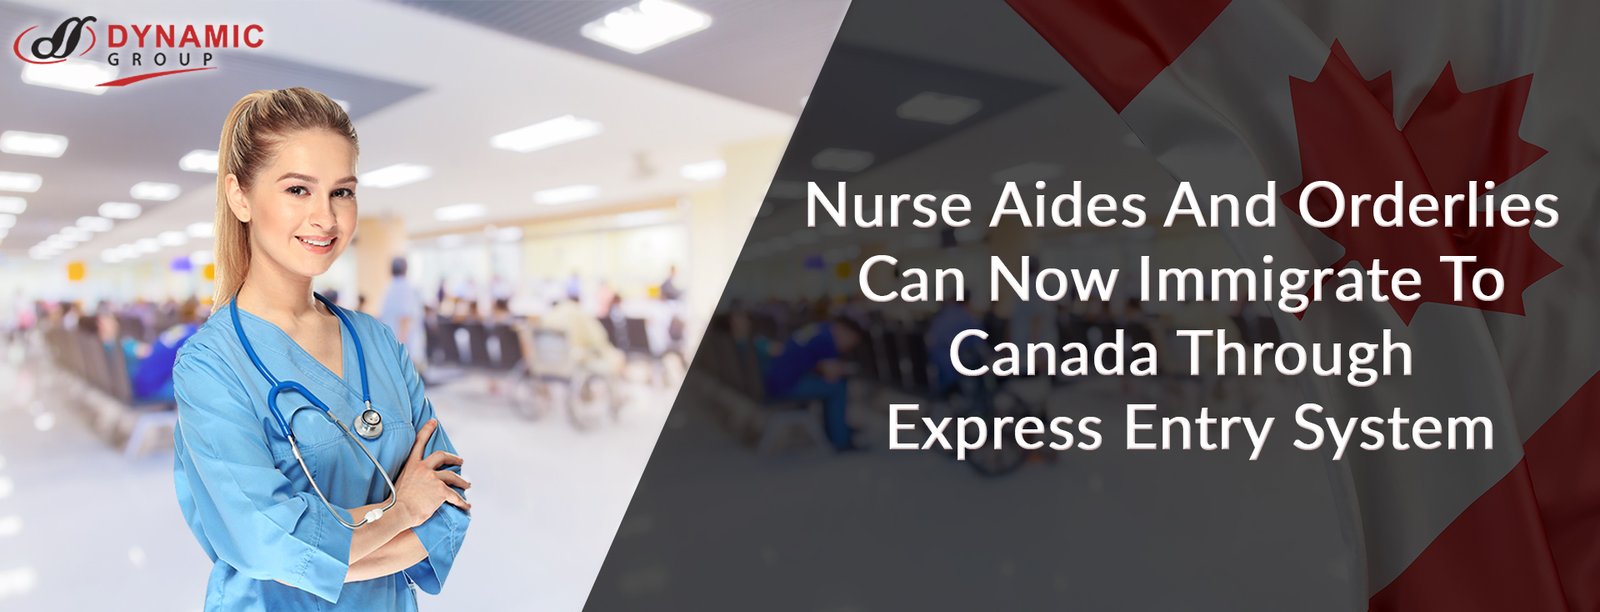 Nurse-Aides-and-Orderlies-Canada